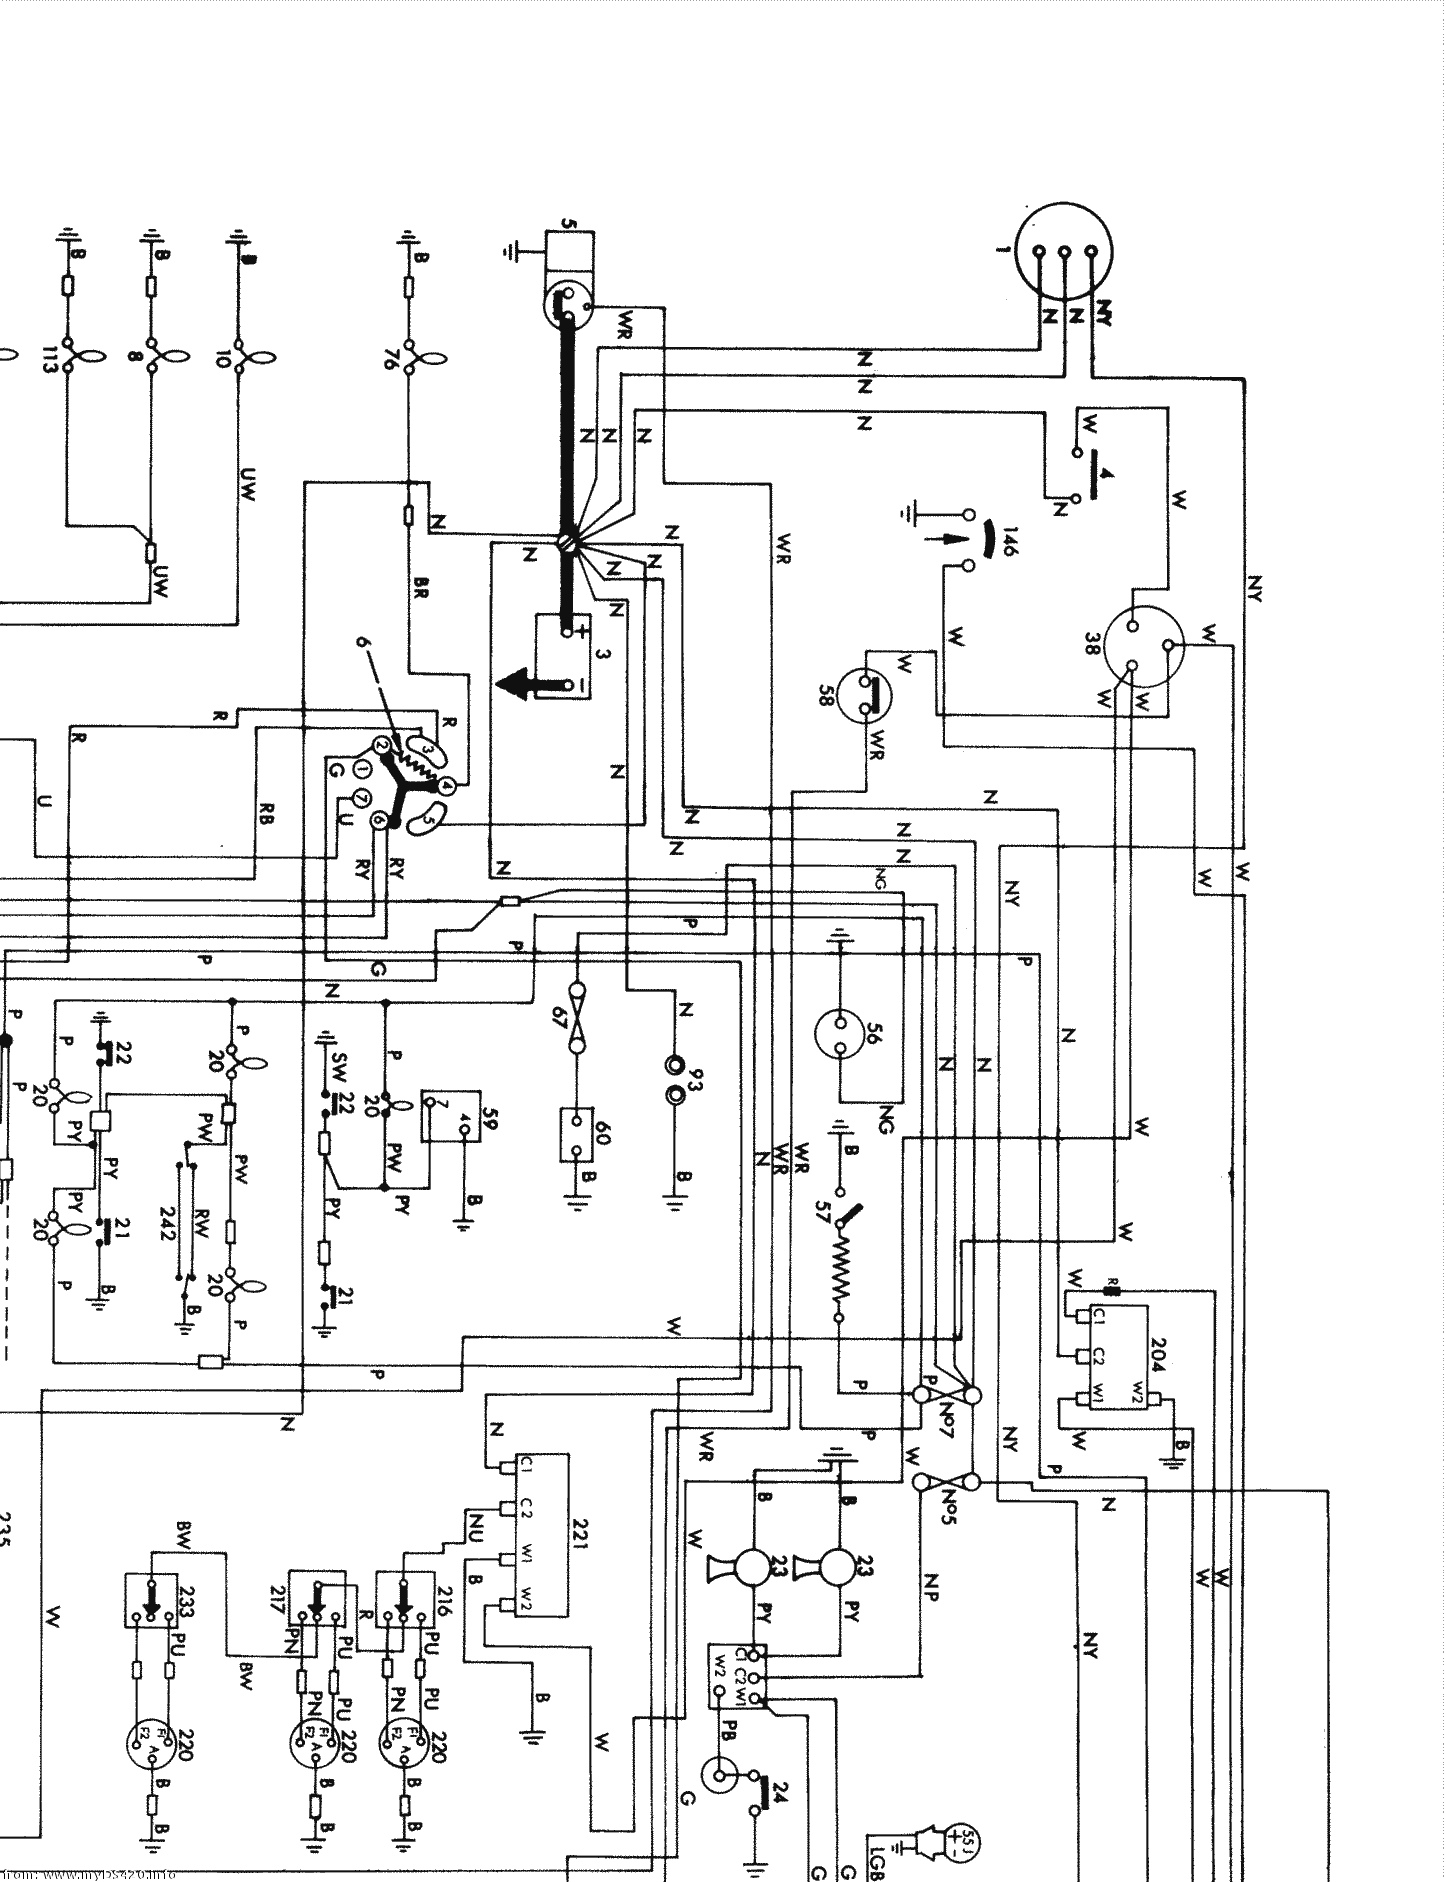 wiring diagram medium res. Ltr NW (1970)